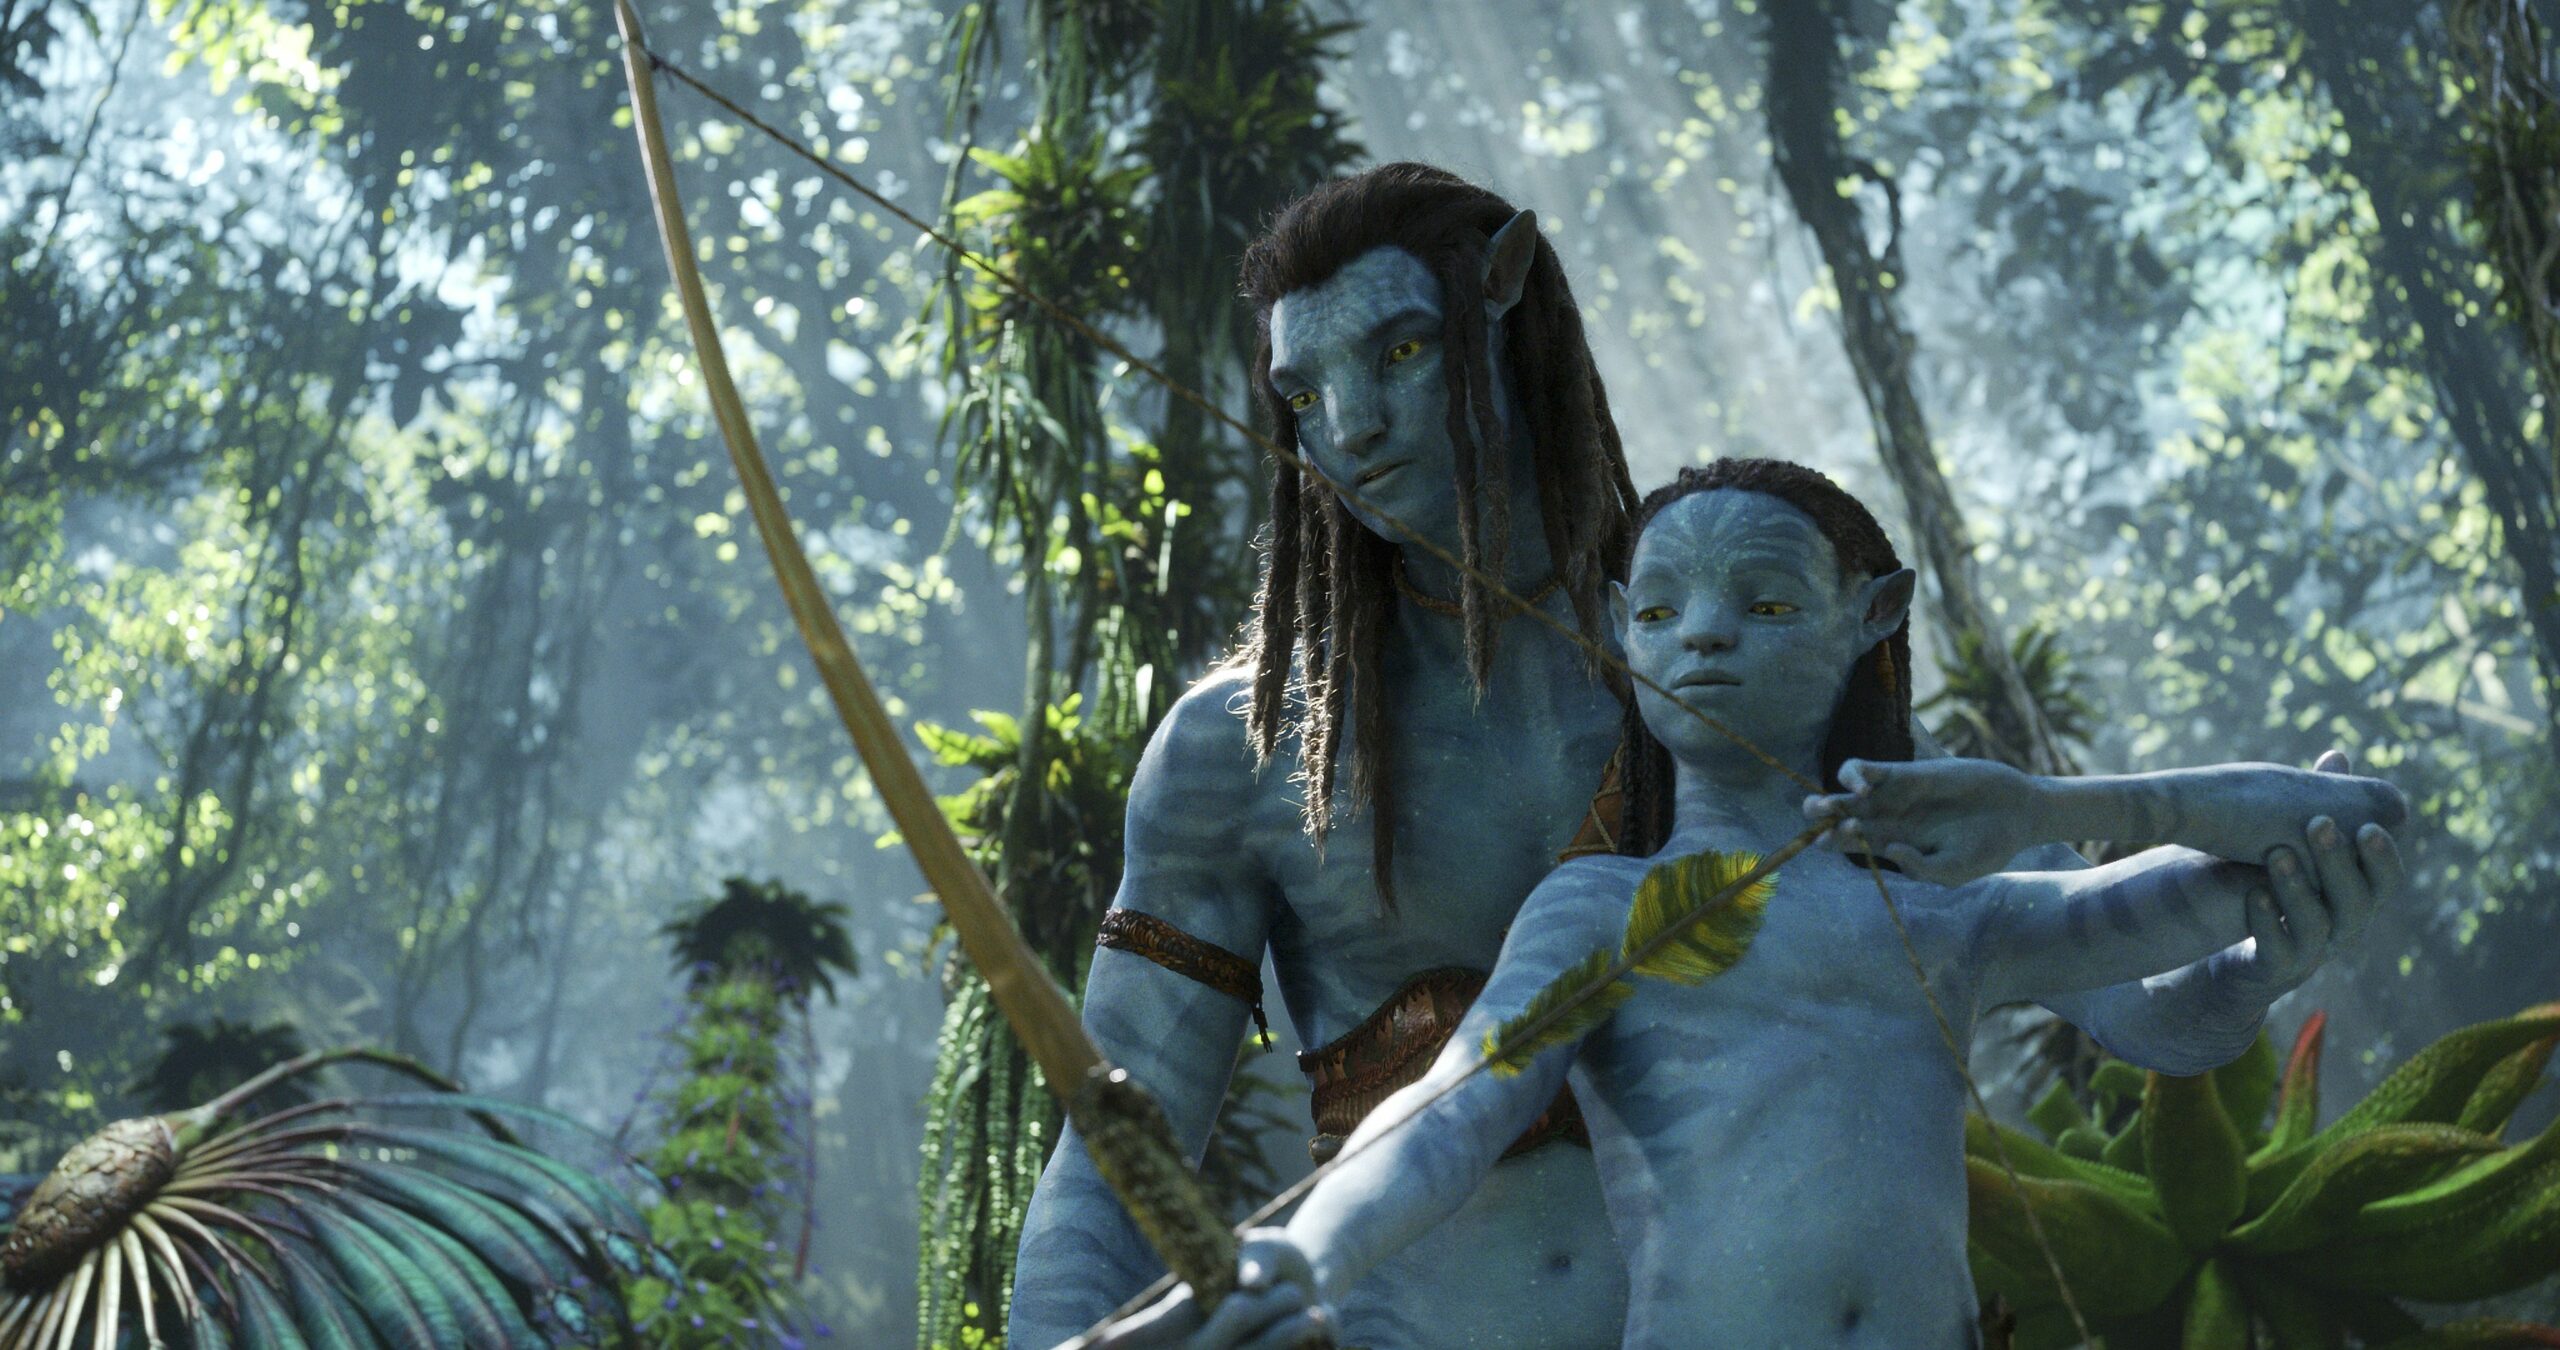 Avatar 2's Budget